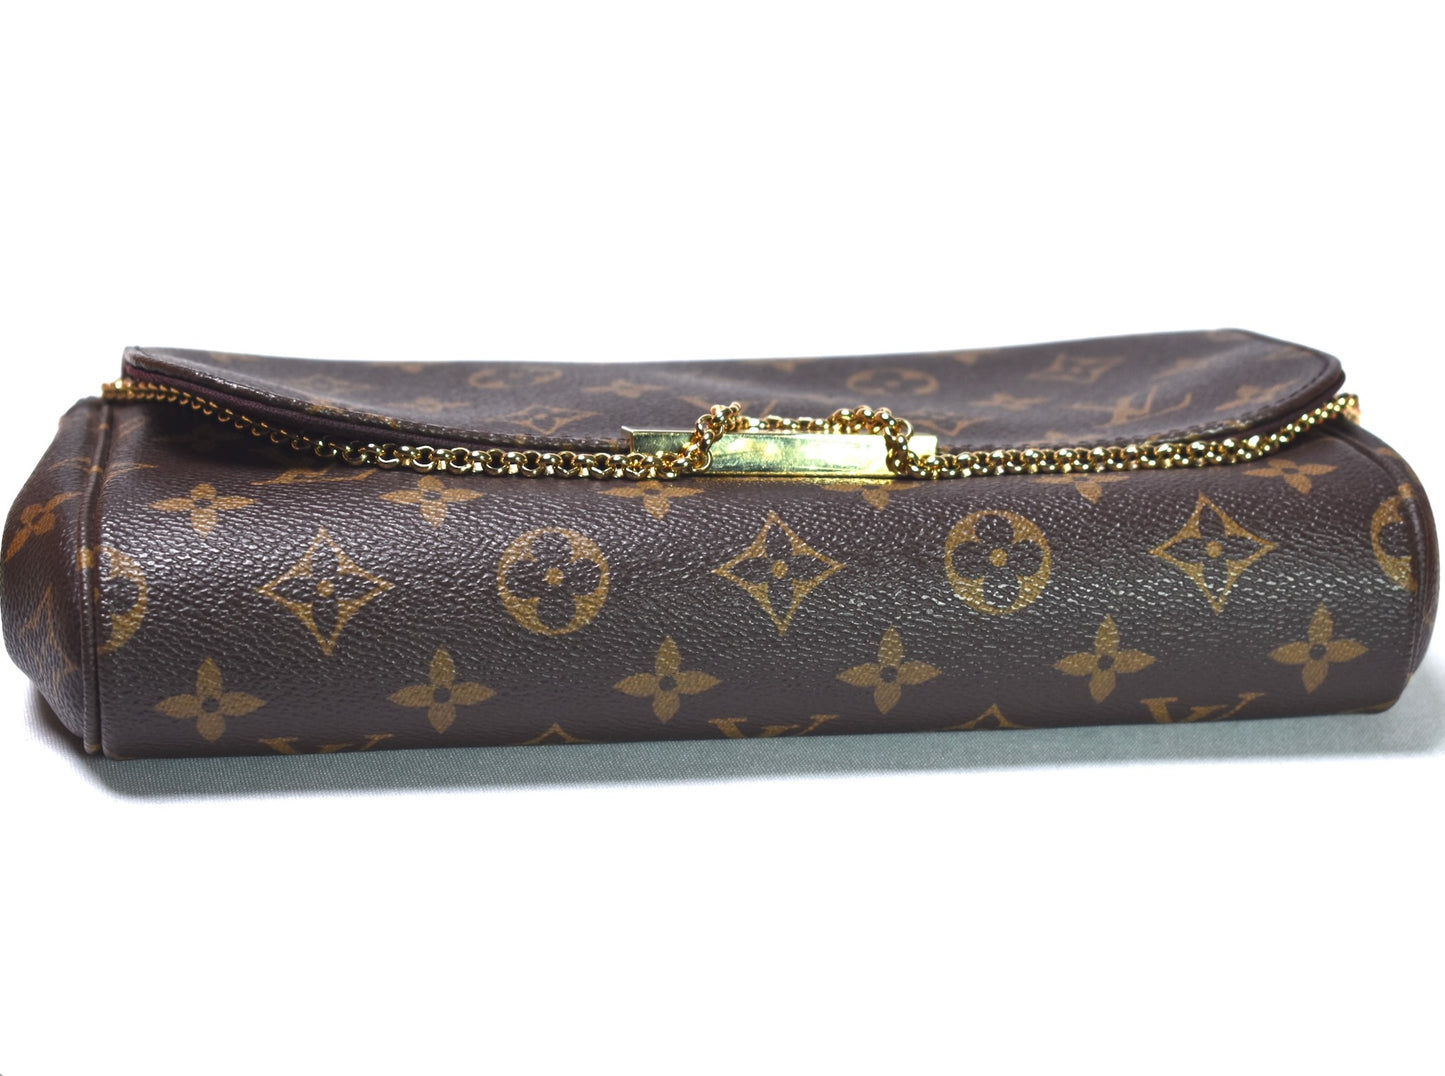 Louis Vuitton Favorite Handbag Monogram Canvas mm Brown